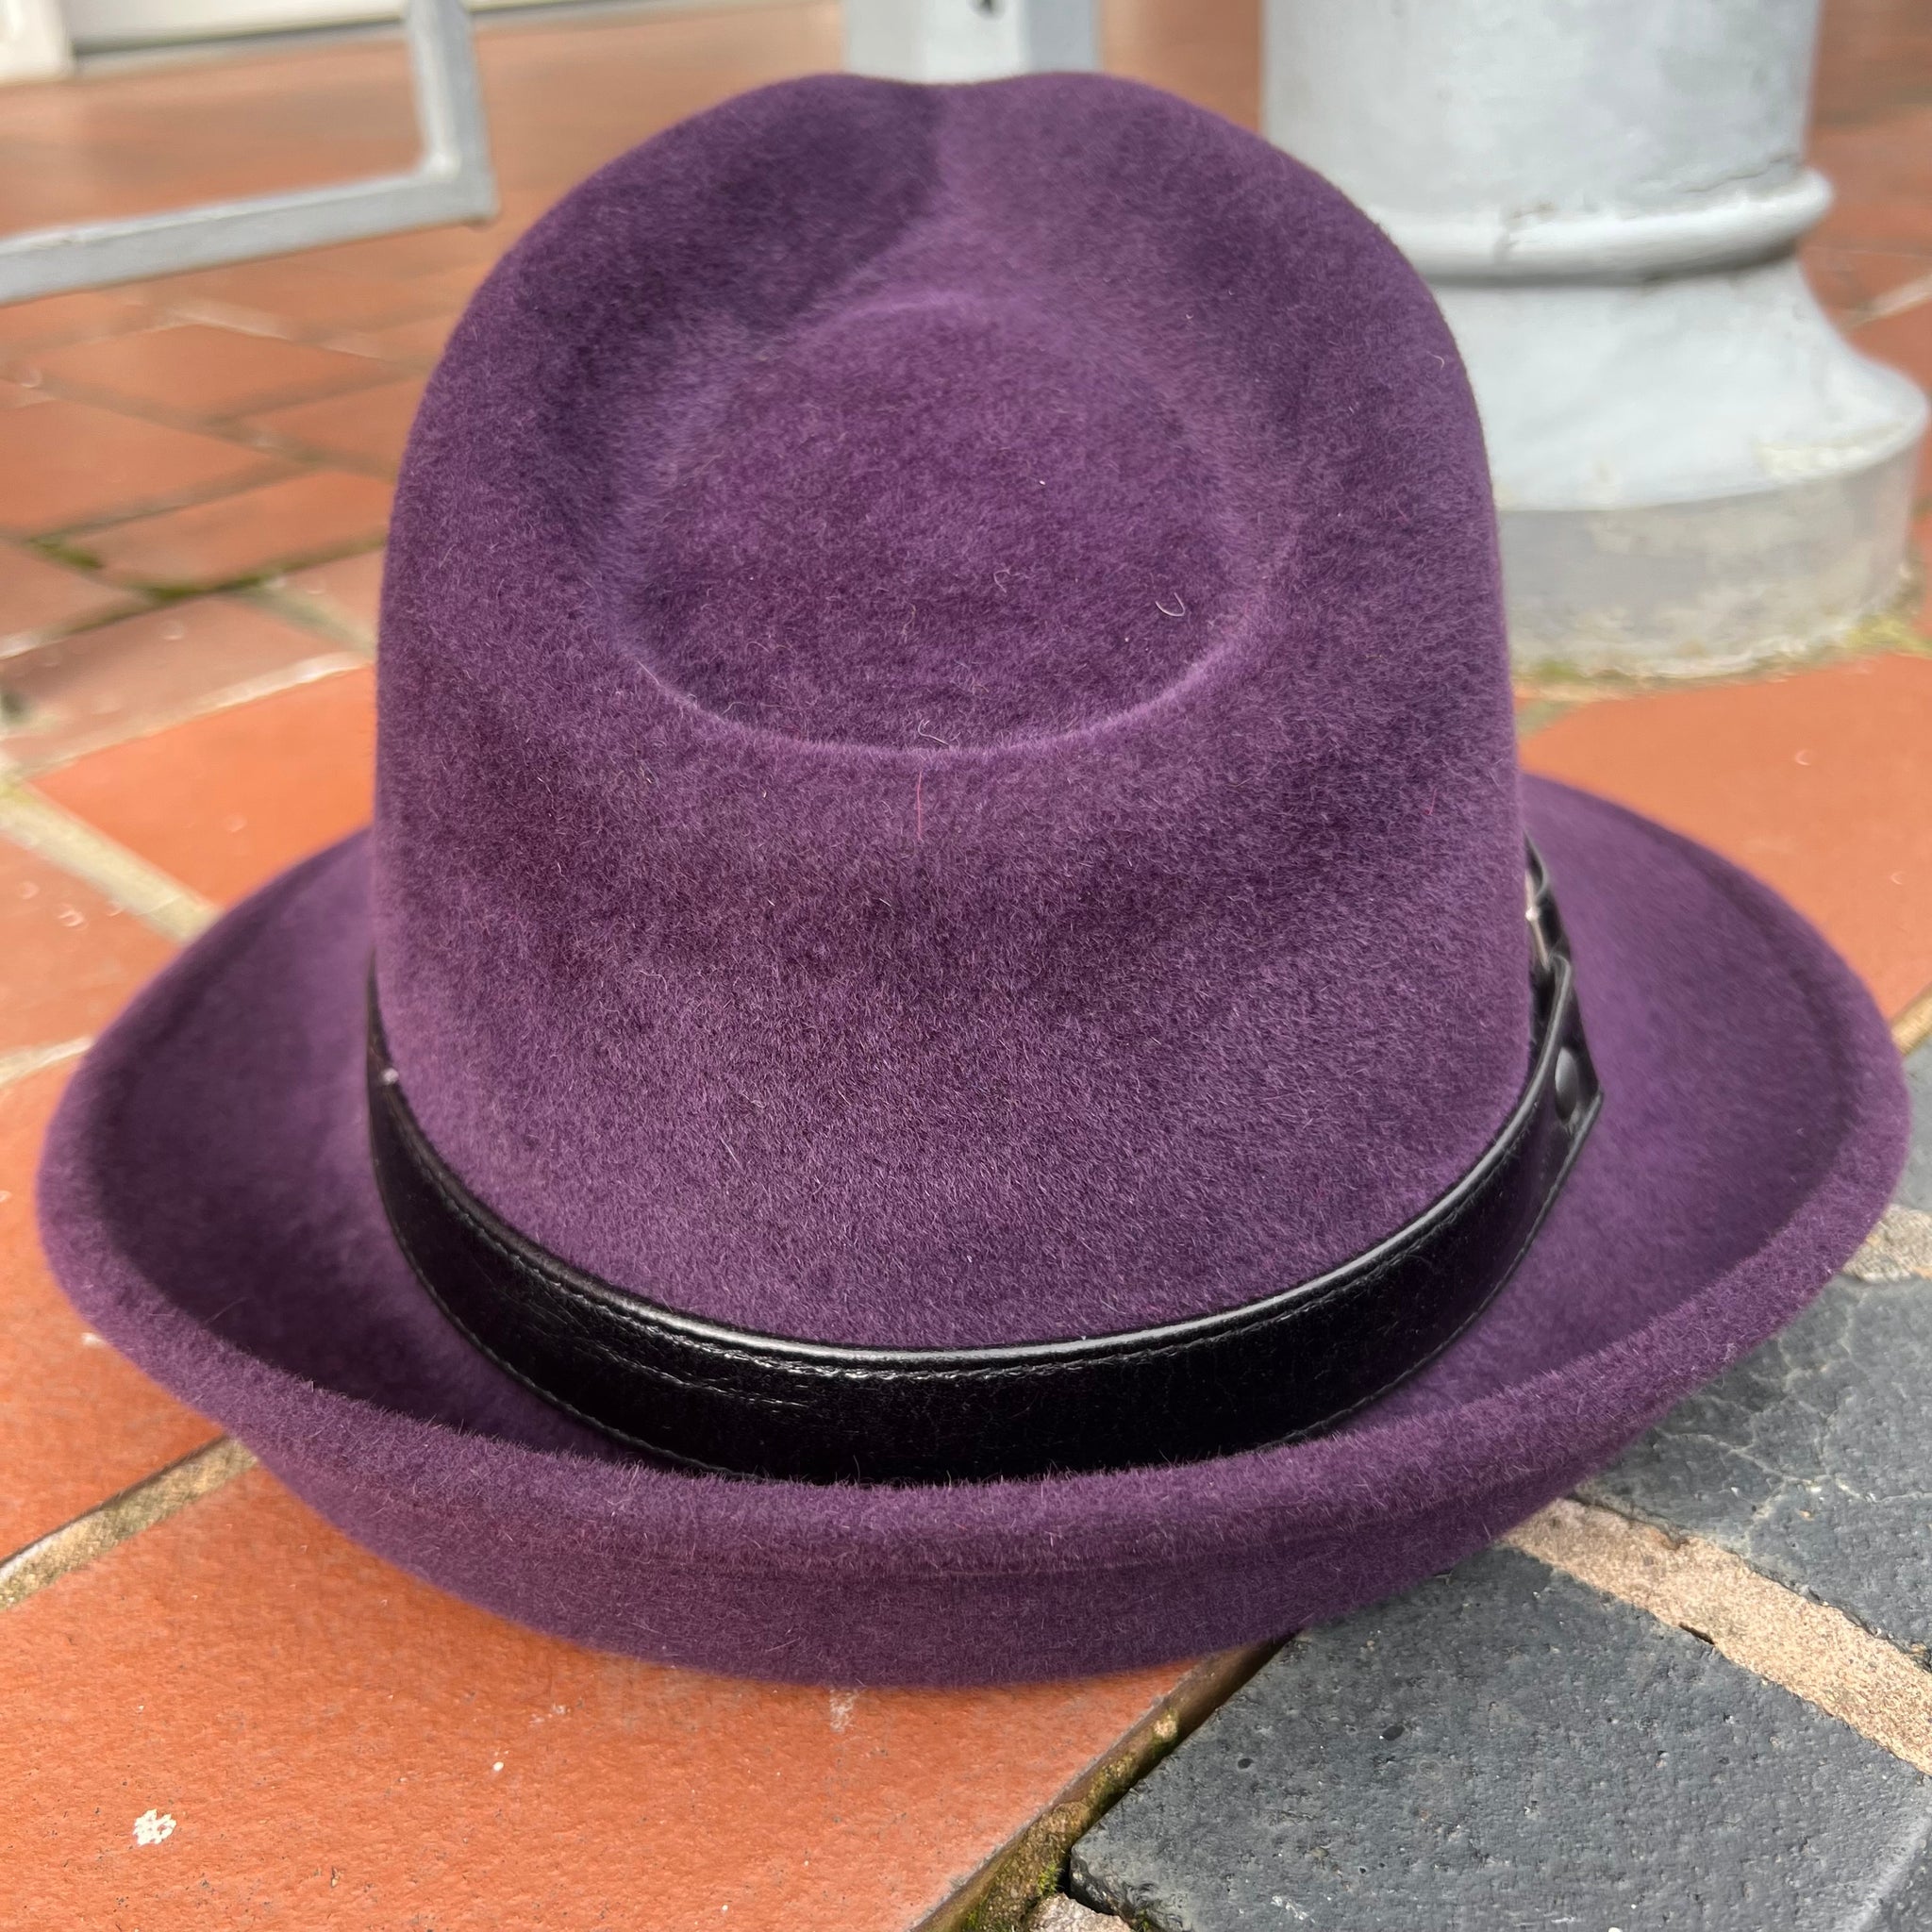 Sam Spade Blackcurrant Fur Felt Trilby Hat